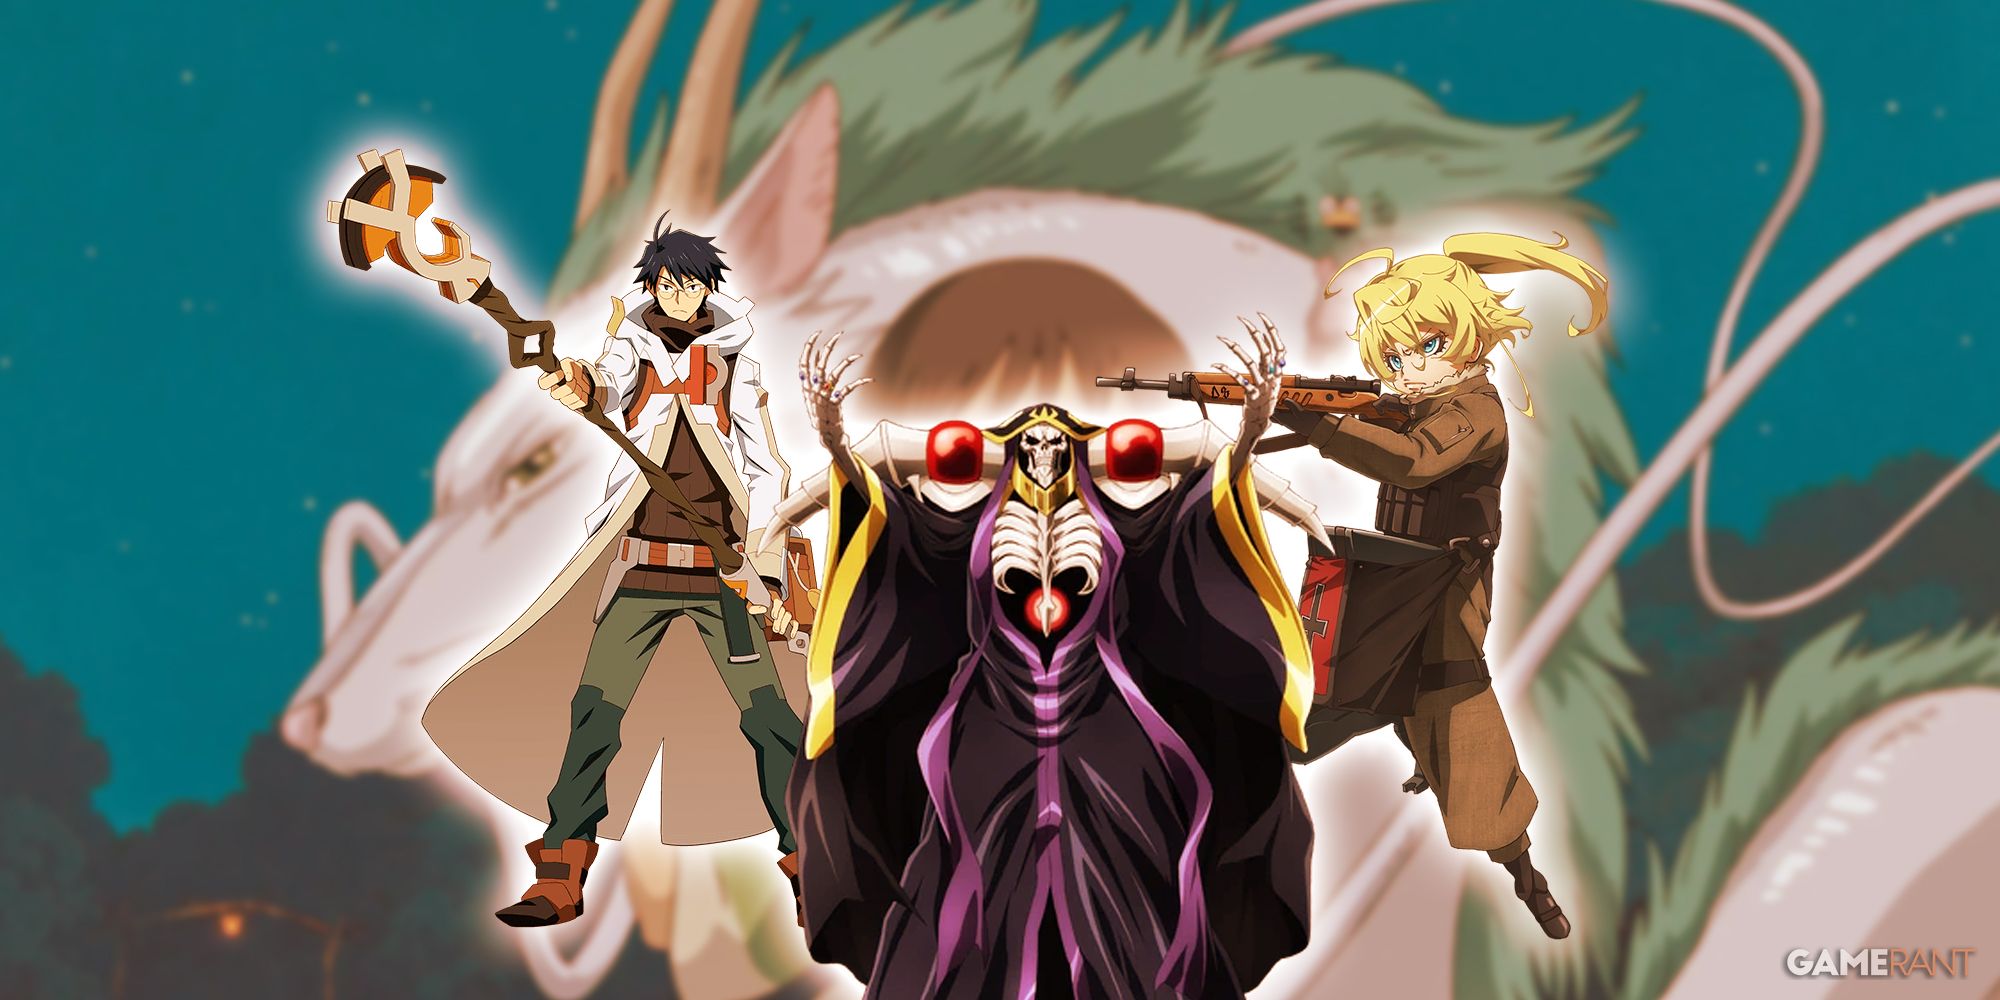 Wizards In Isekai Anime Log Horizon Shiroe, Overlord Ainz Ooal Gown, Saga of Tanya the Evil Tanya Degurechaff